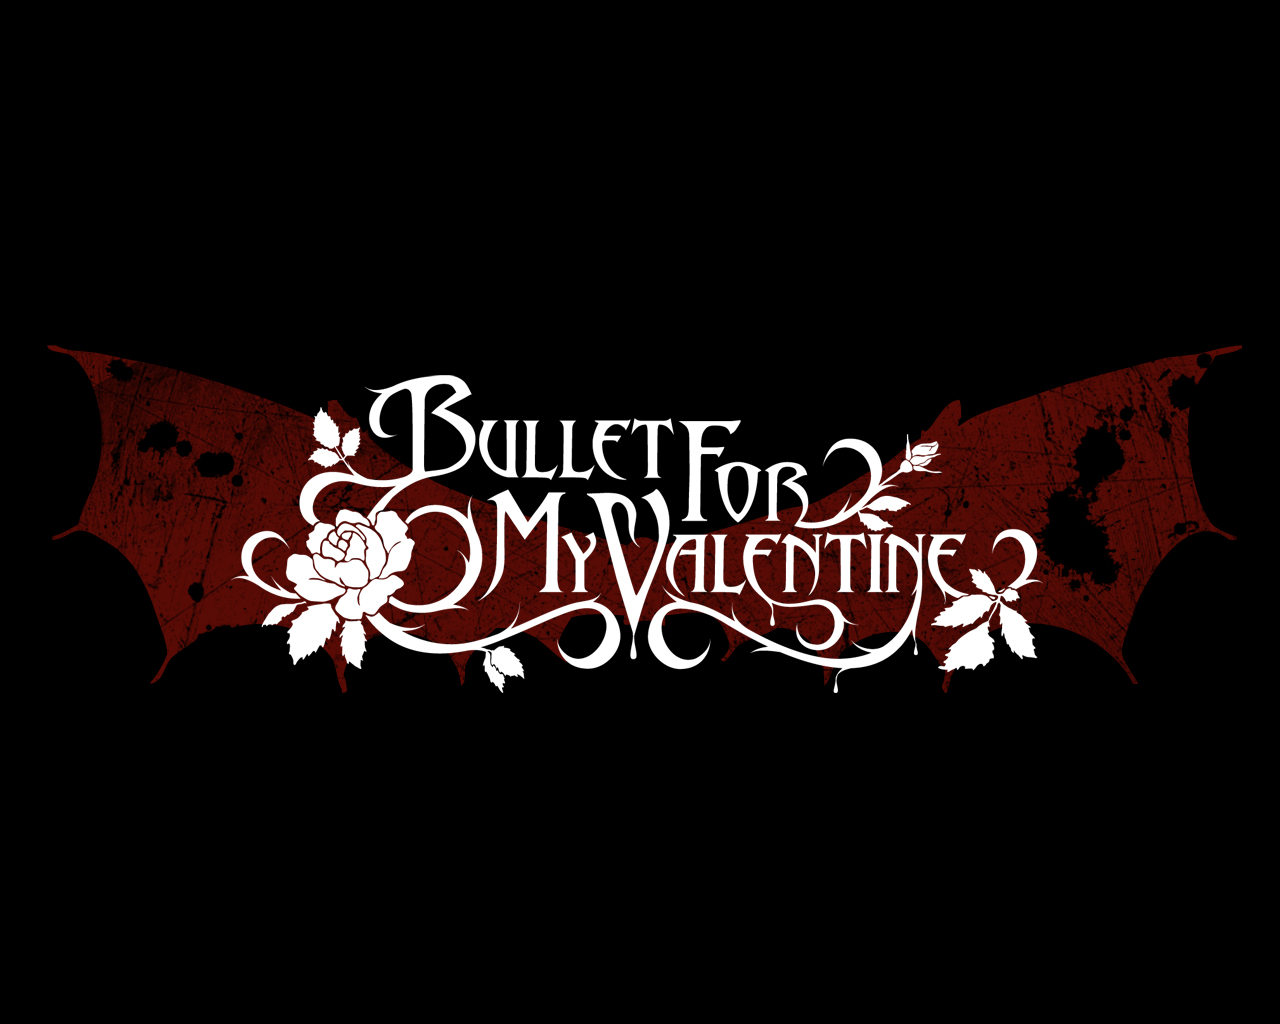 Wallpaper Bullet For My Valentine 3d Desktop